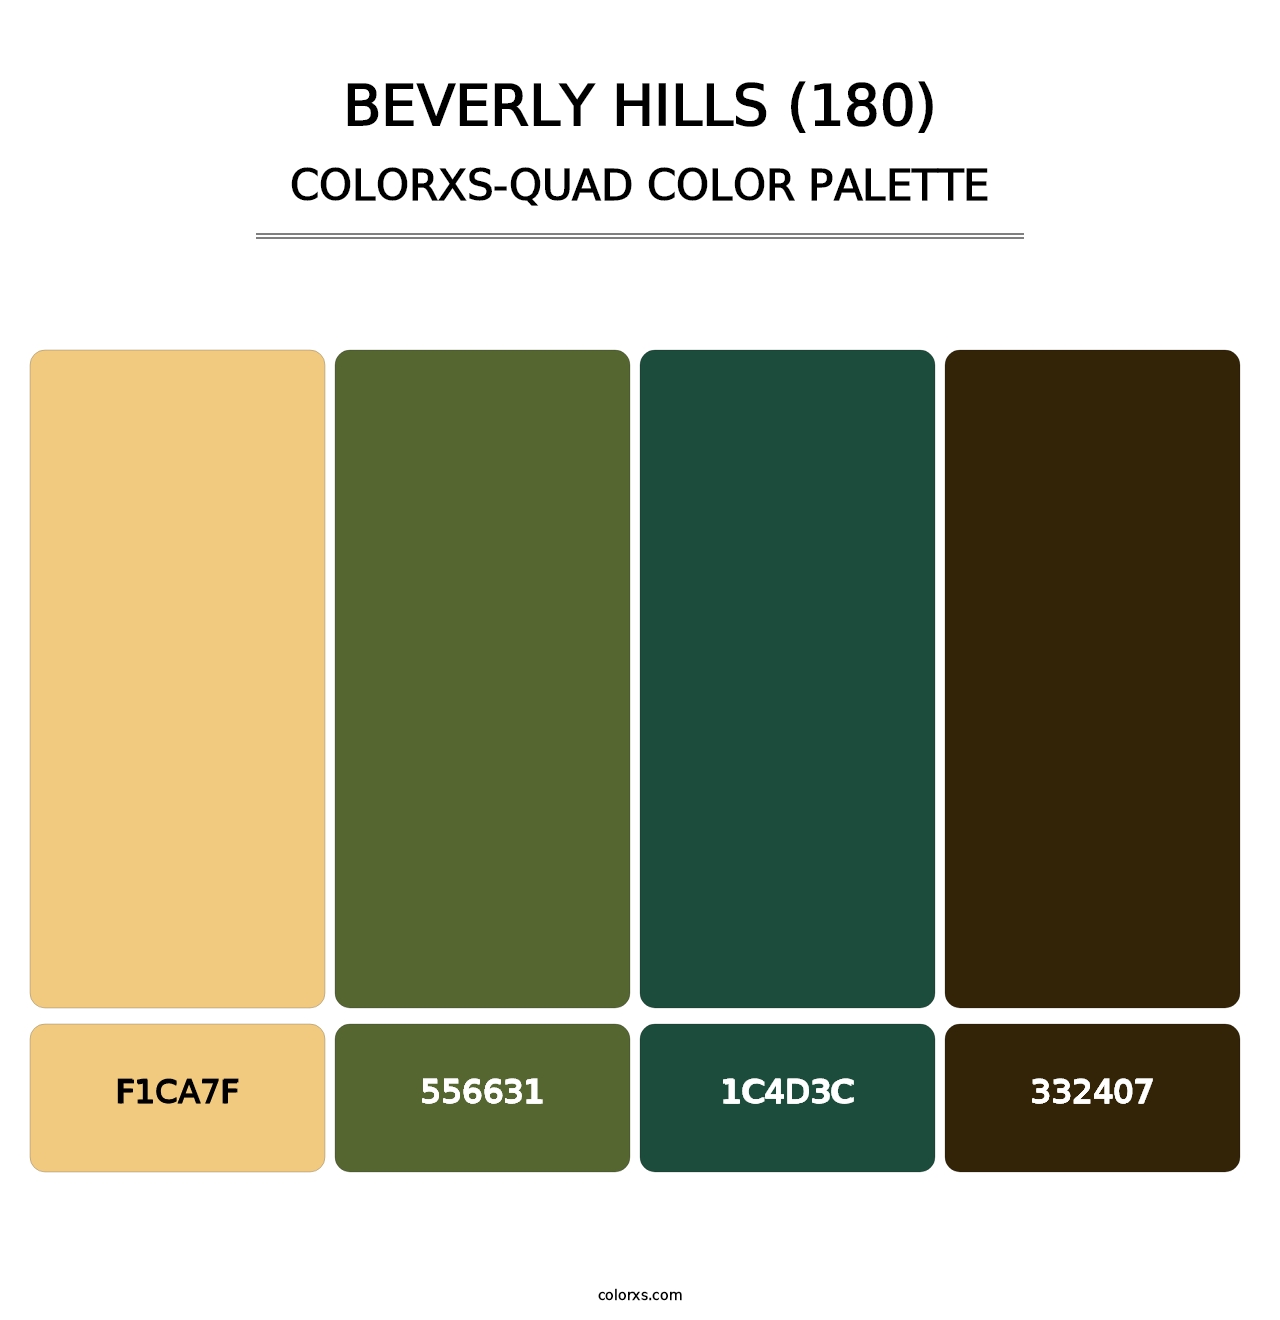 Beverly Hills (180) - Colorxs Quad Palette